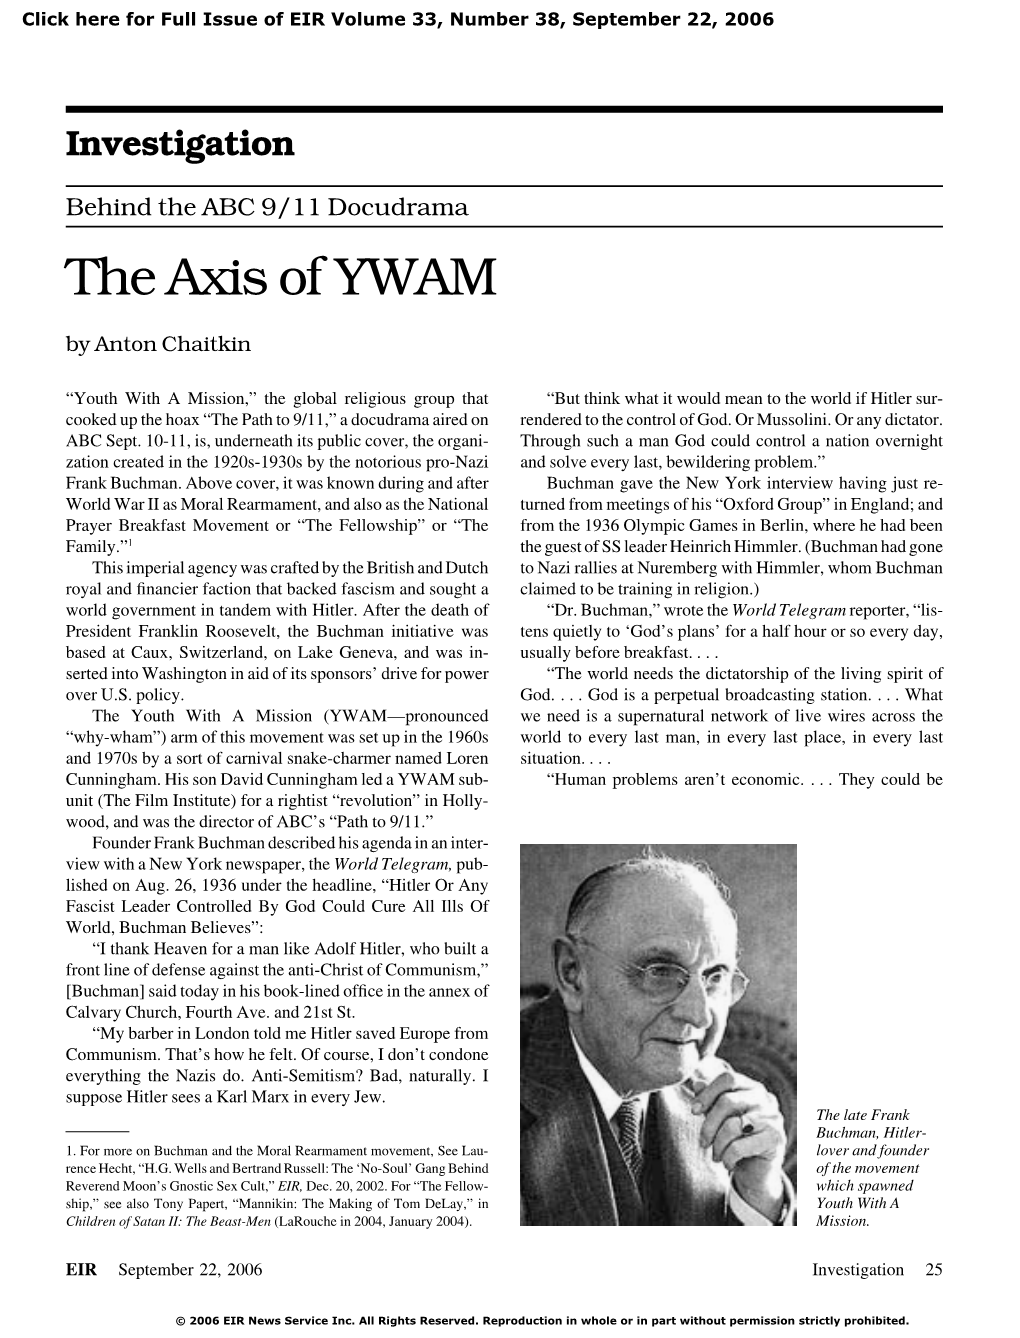 Behind the ABC 9/11 Docudrama: the Axis of YWAM